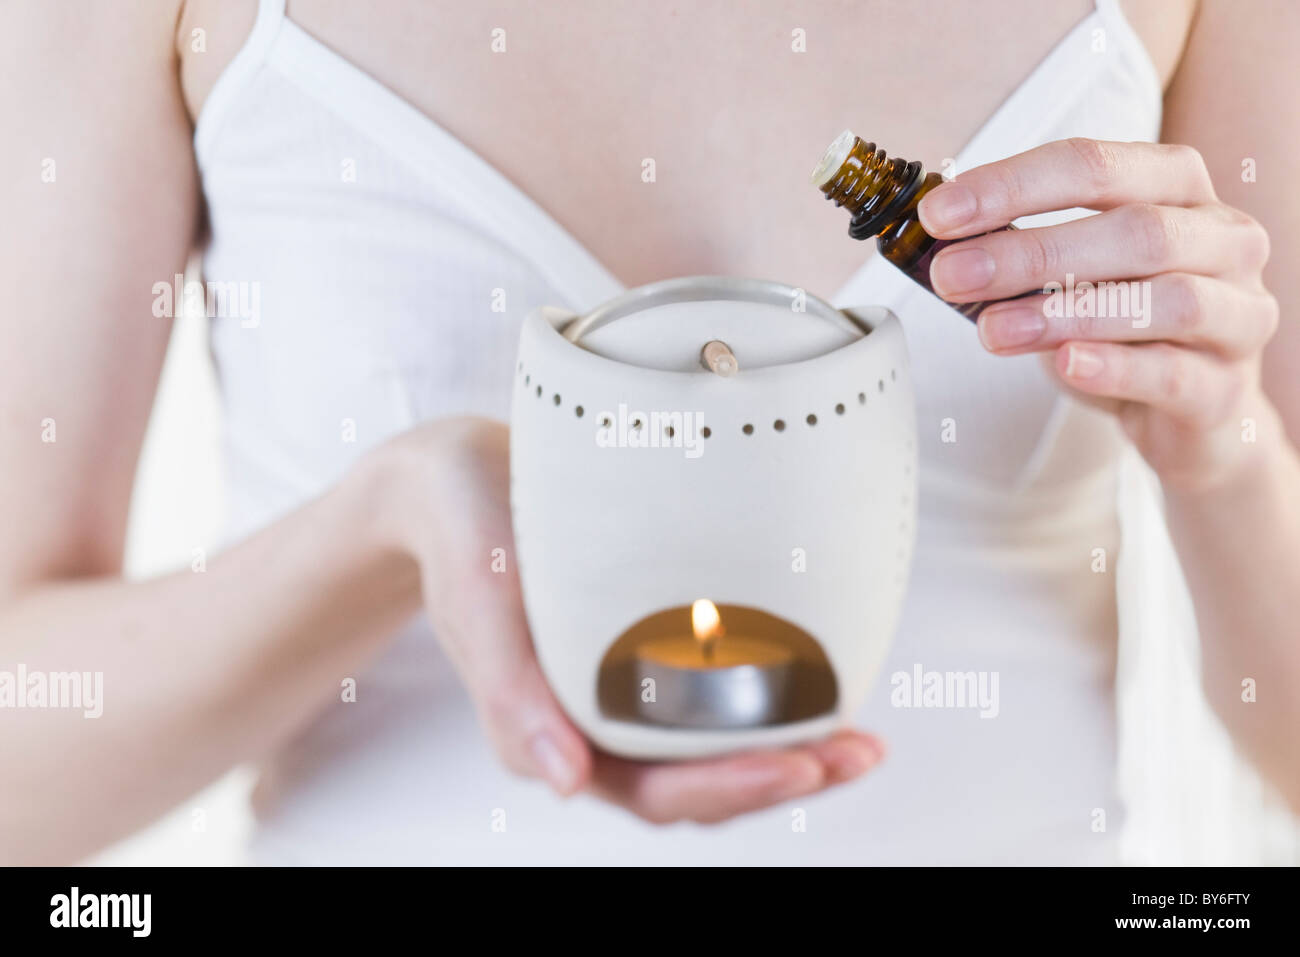 Woman using aromatherapny burner Stock Photo